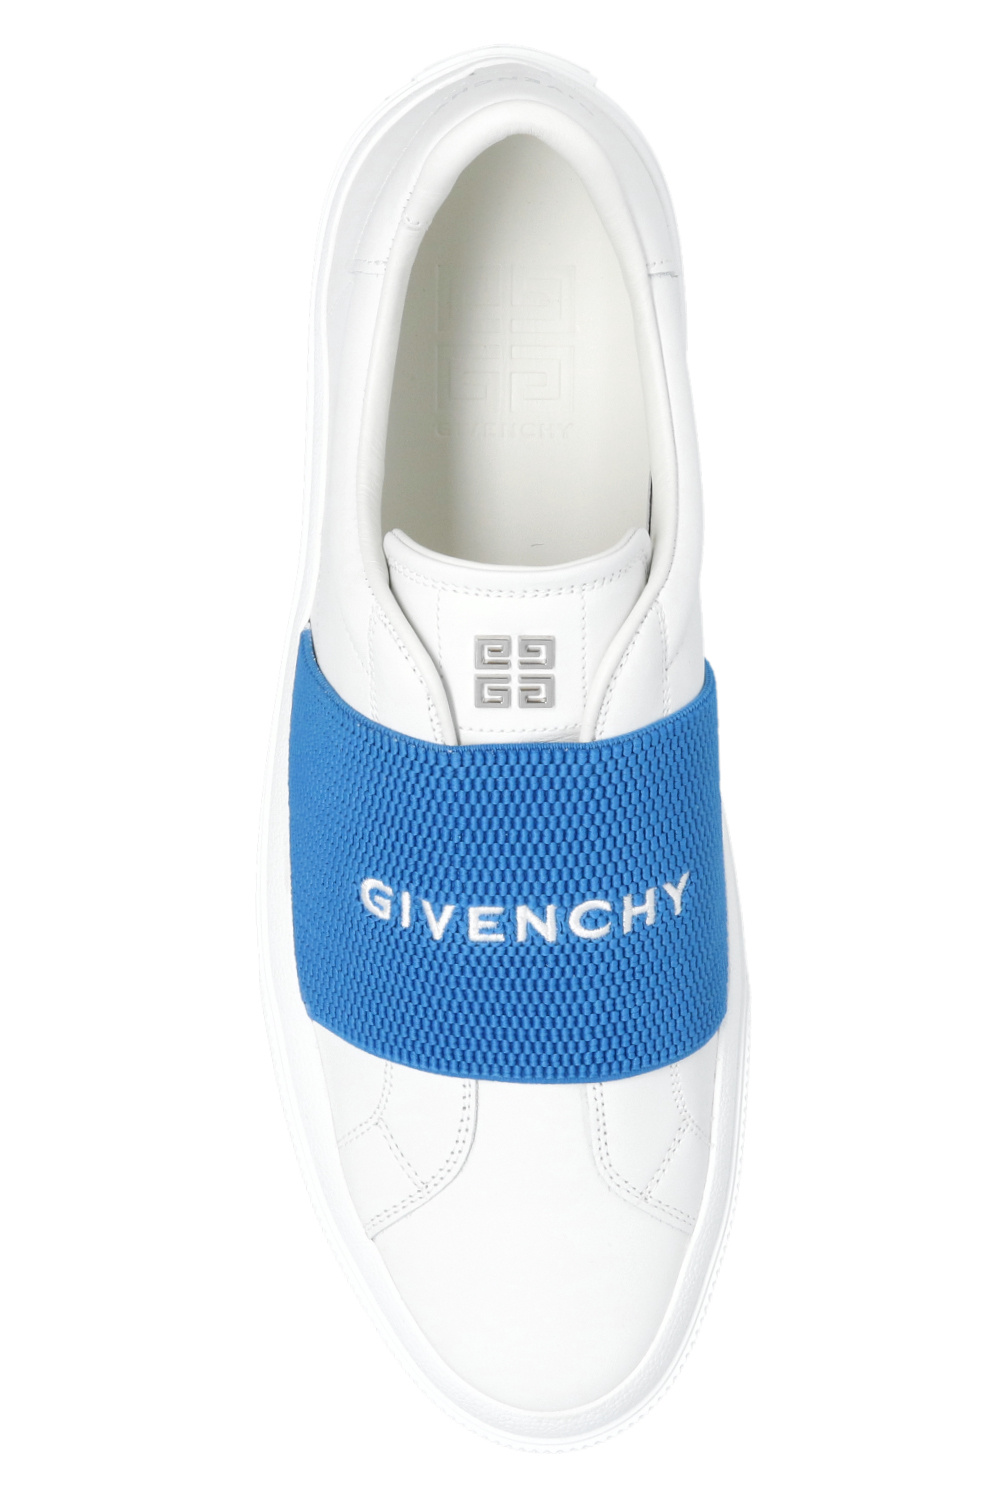 Givenchy 'City Sport' sneakers | Men's Shoes | Vitkac